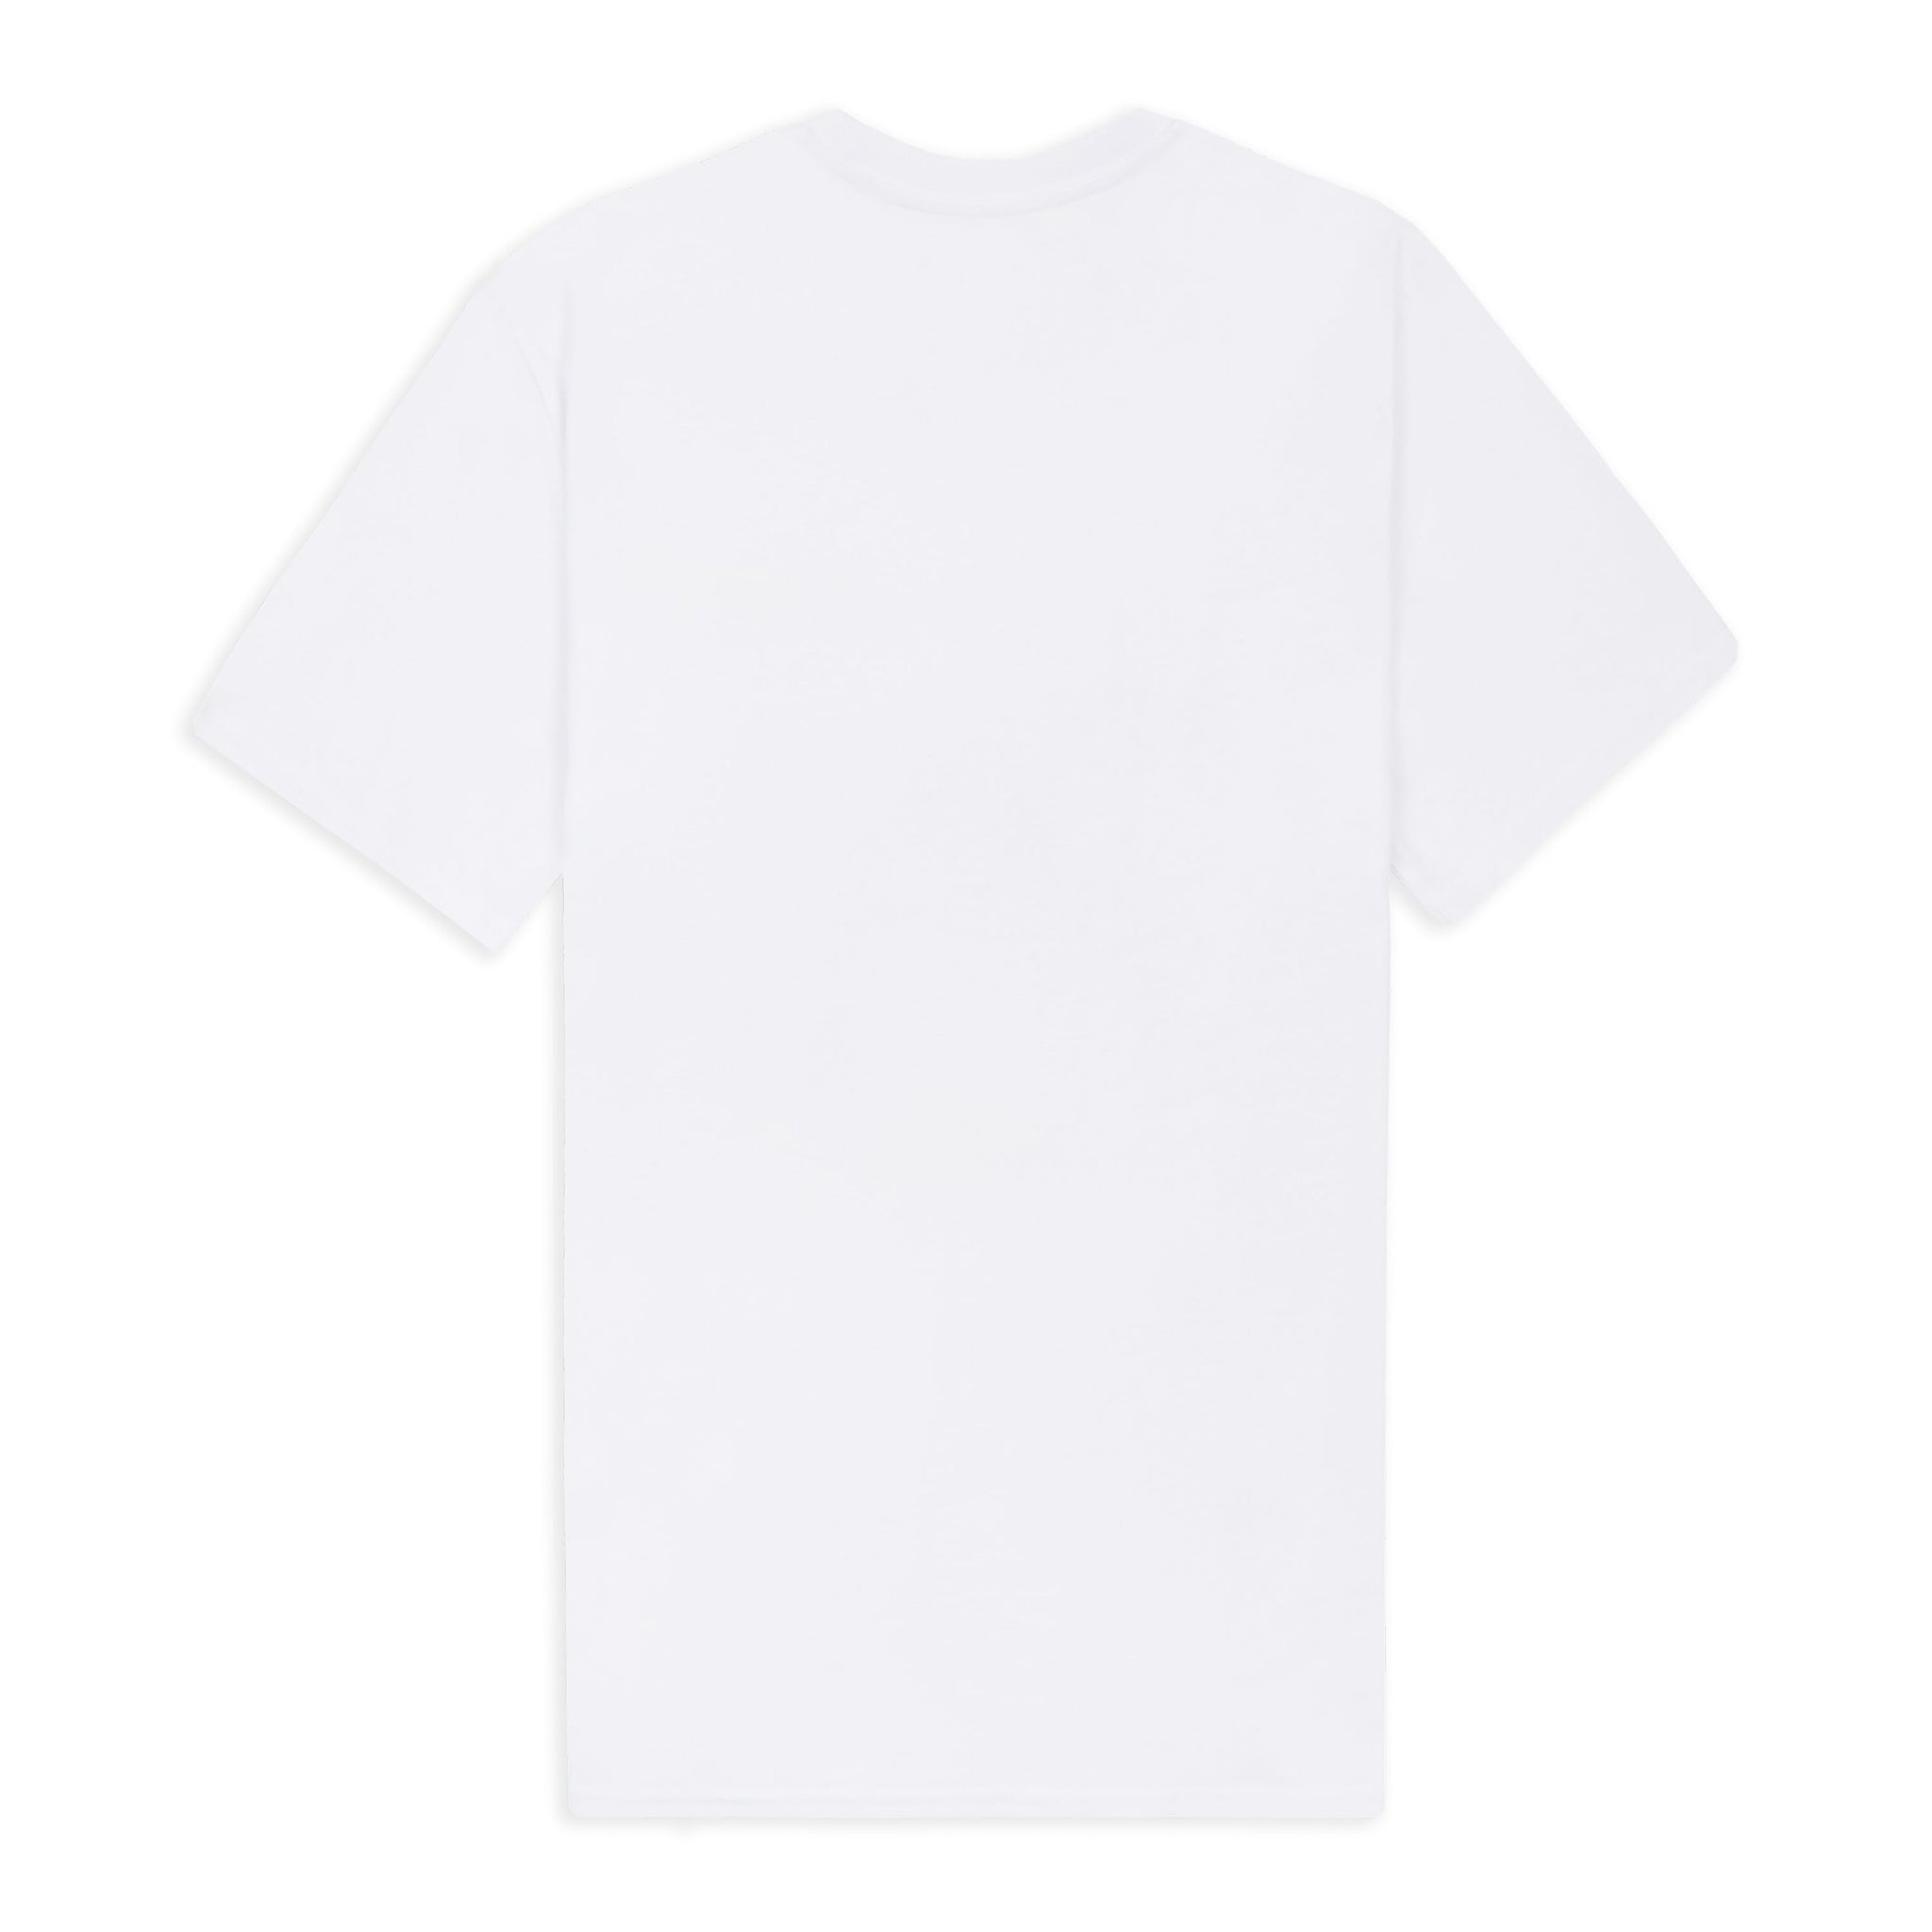 Drumork 30 Year™ T-Shirt